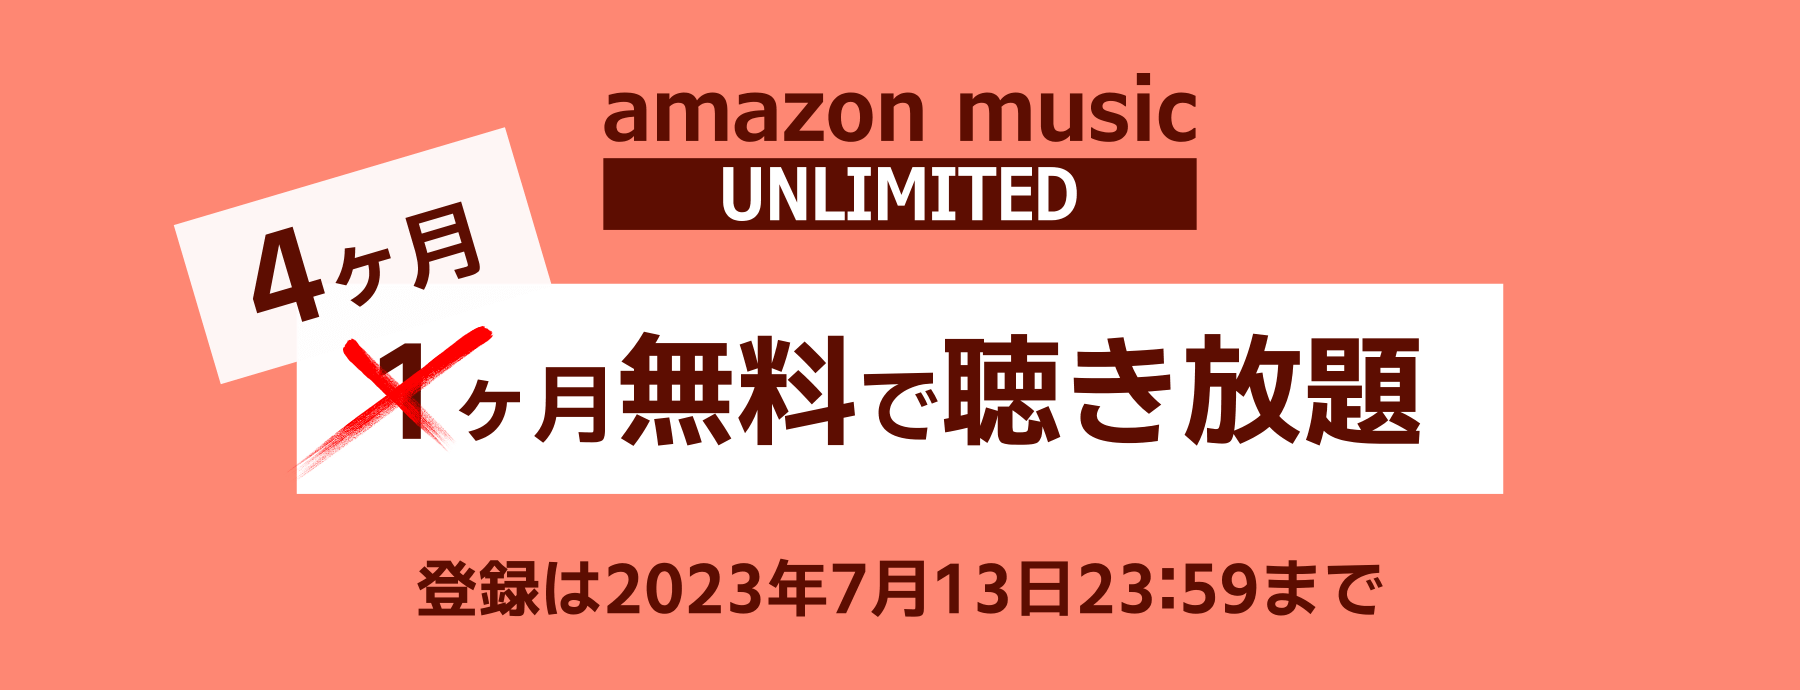 Amazon Music ４ヶ月無料セール開催中